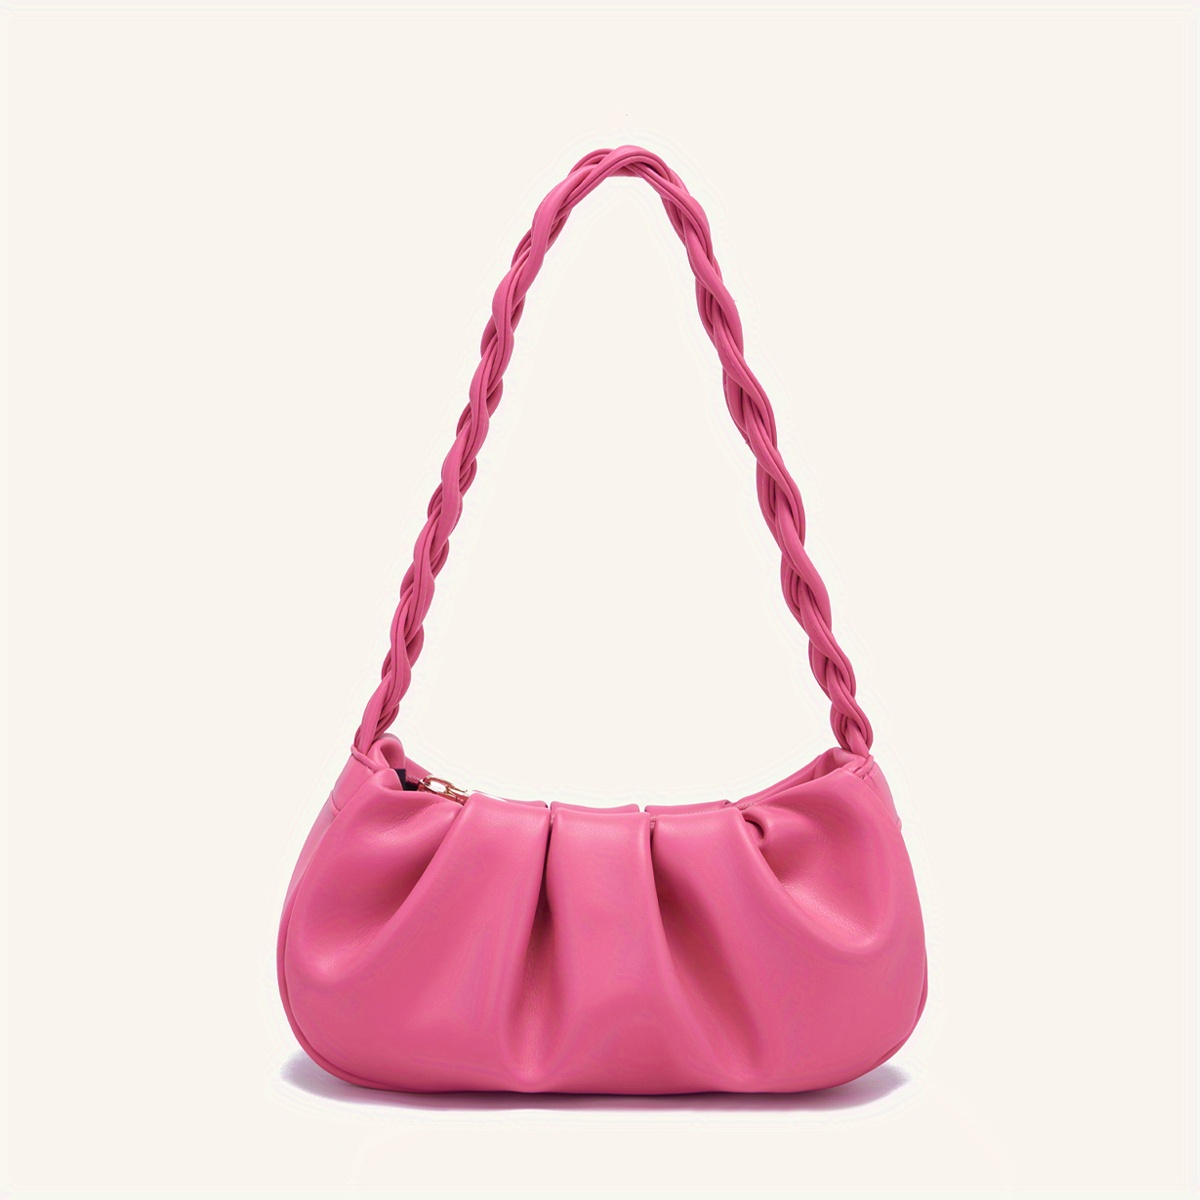 Small Shoulder Bag Purse for Women Y2K Hobo Handbag Trendy Clutch Purse 90s Y2K Bags for Women